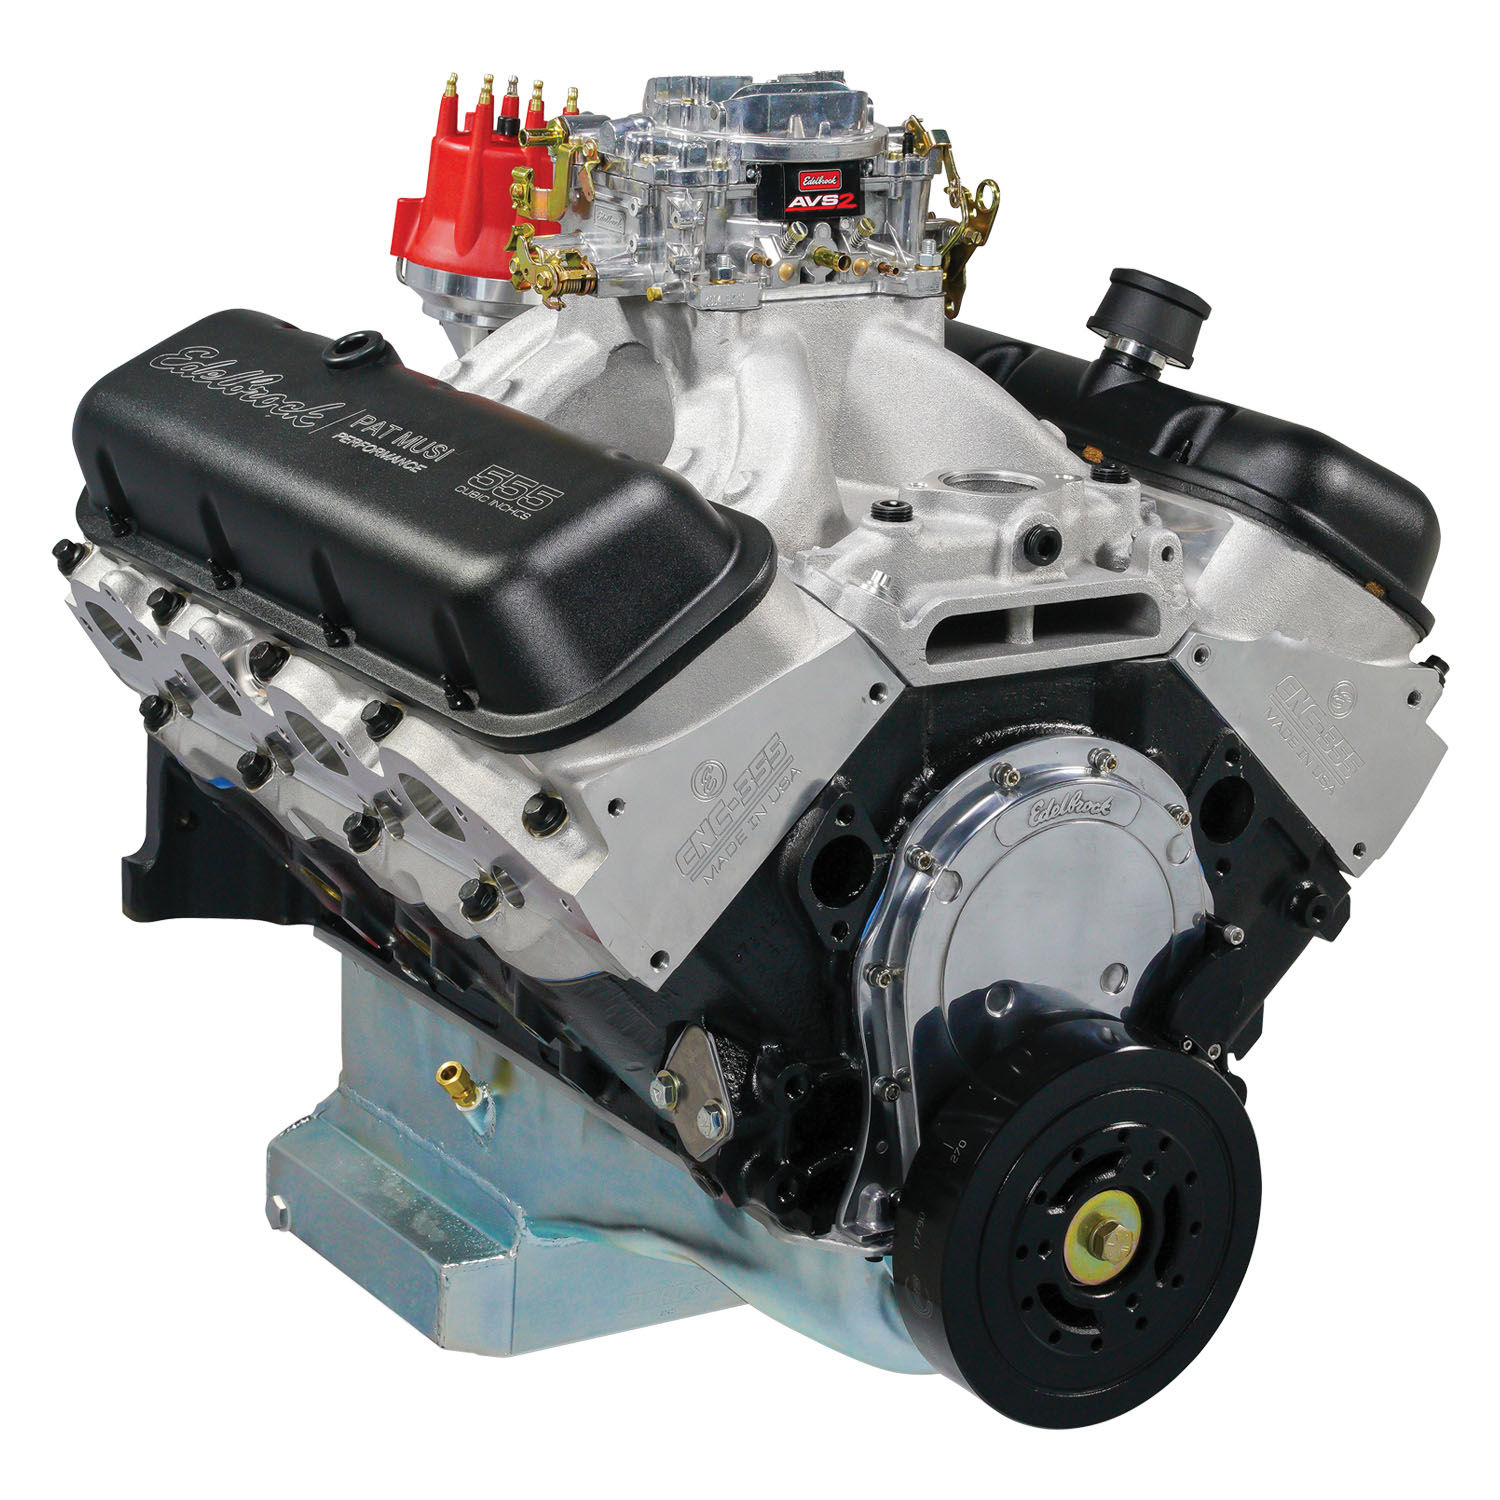 Edelbrock/Musi 555 carbureted Crate Engine